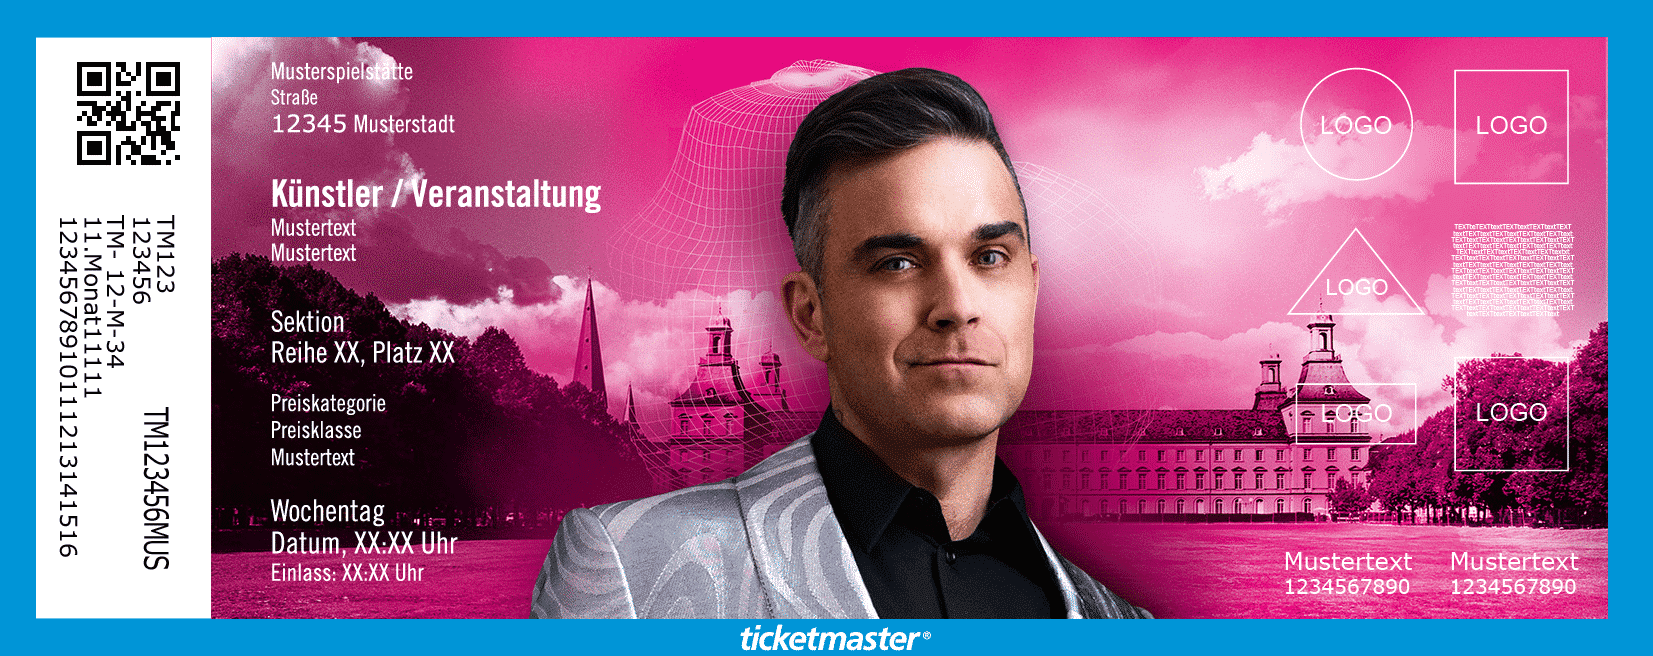 Robbie Williams Bonn Tickets 2020